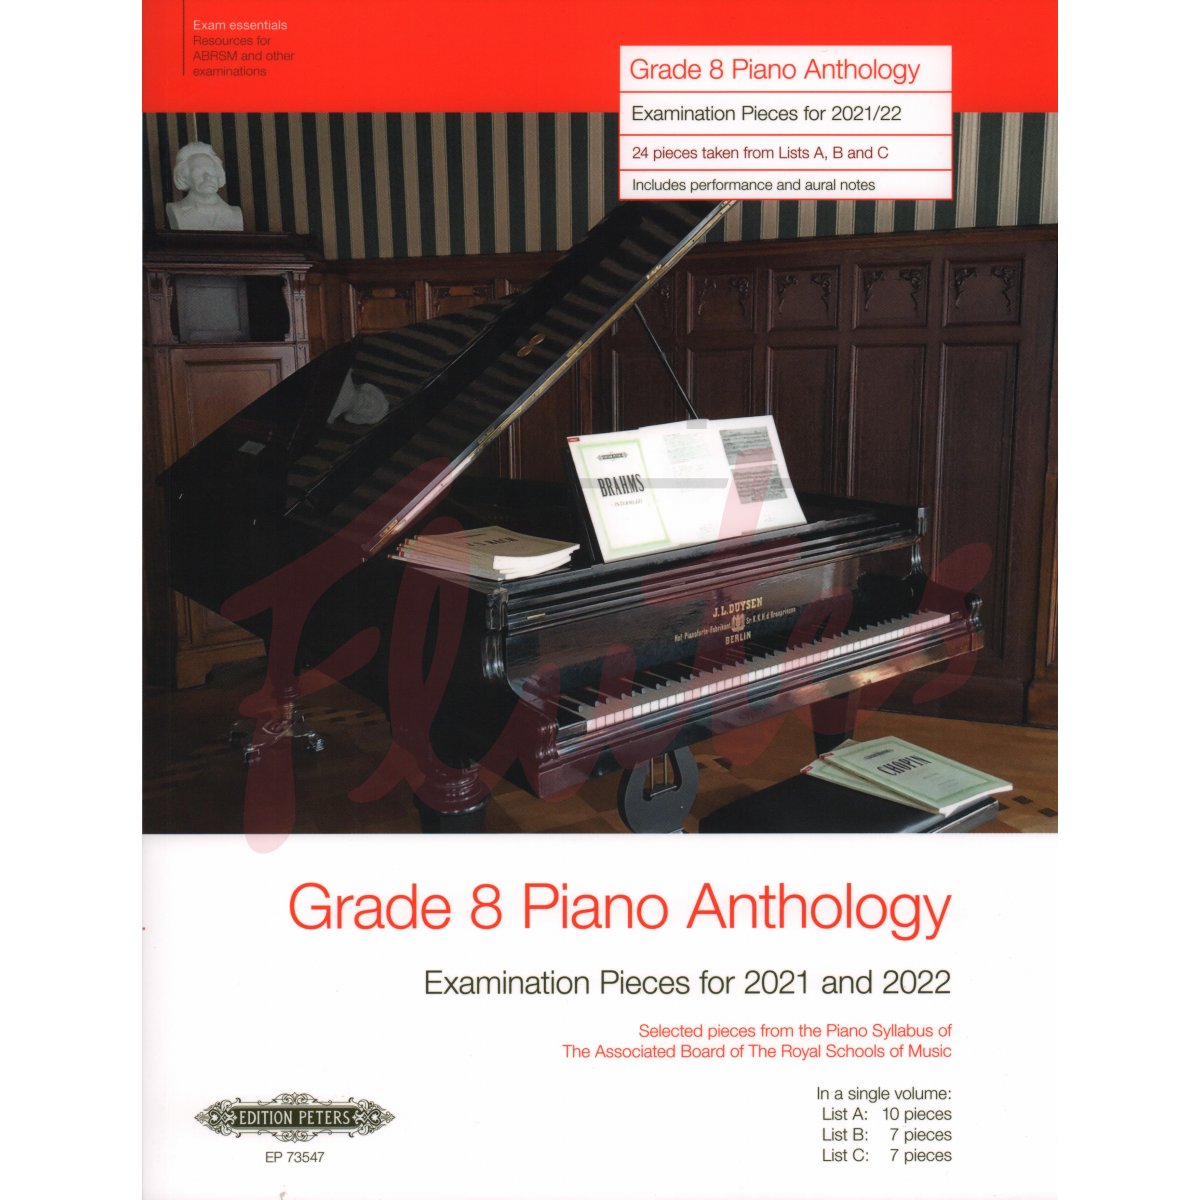 Grade 8 Piano Anthology 2020-2021